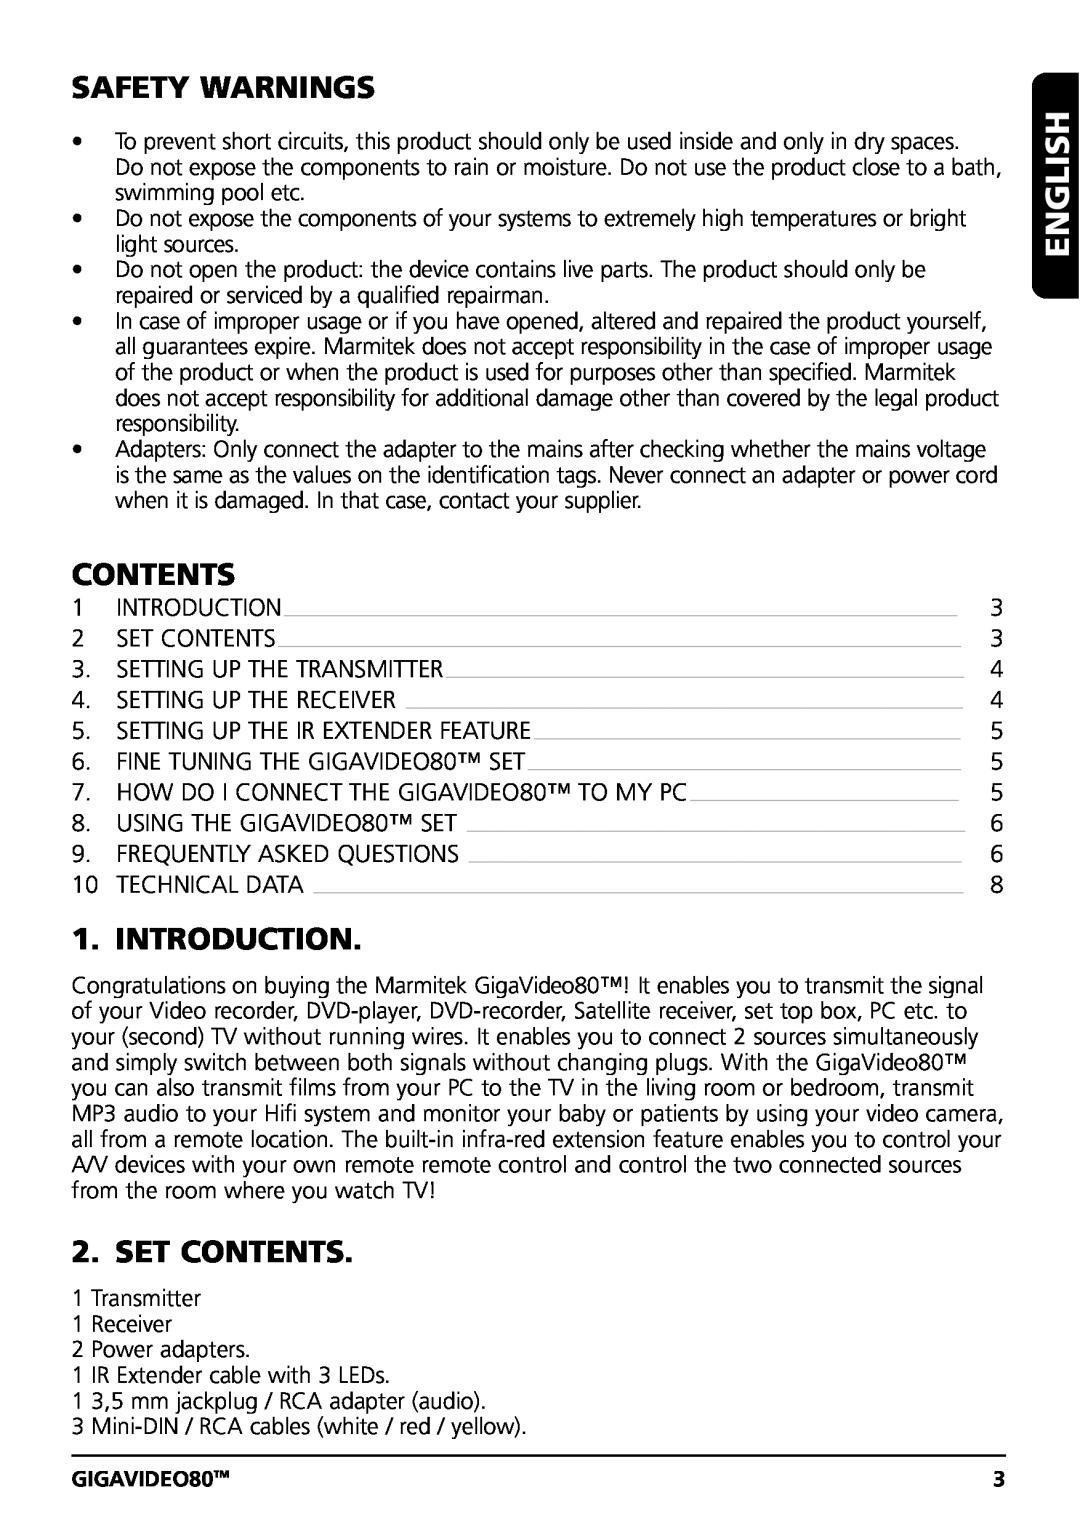 Marmitek GIGAVIDEO80 user manual English, Safety Warnings, Introduction, Set Contents 